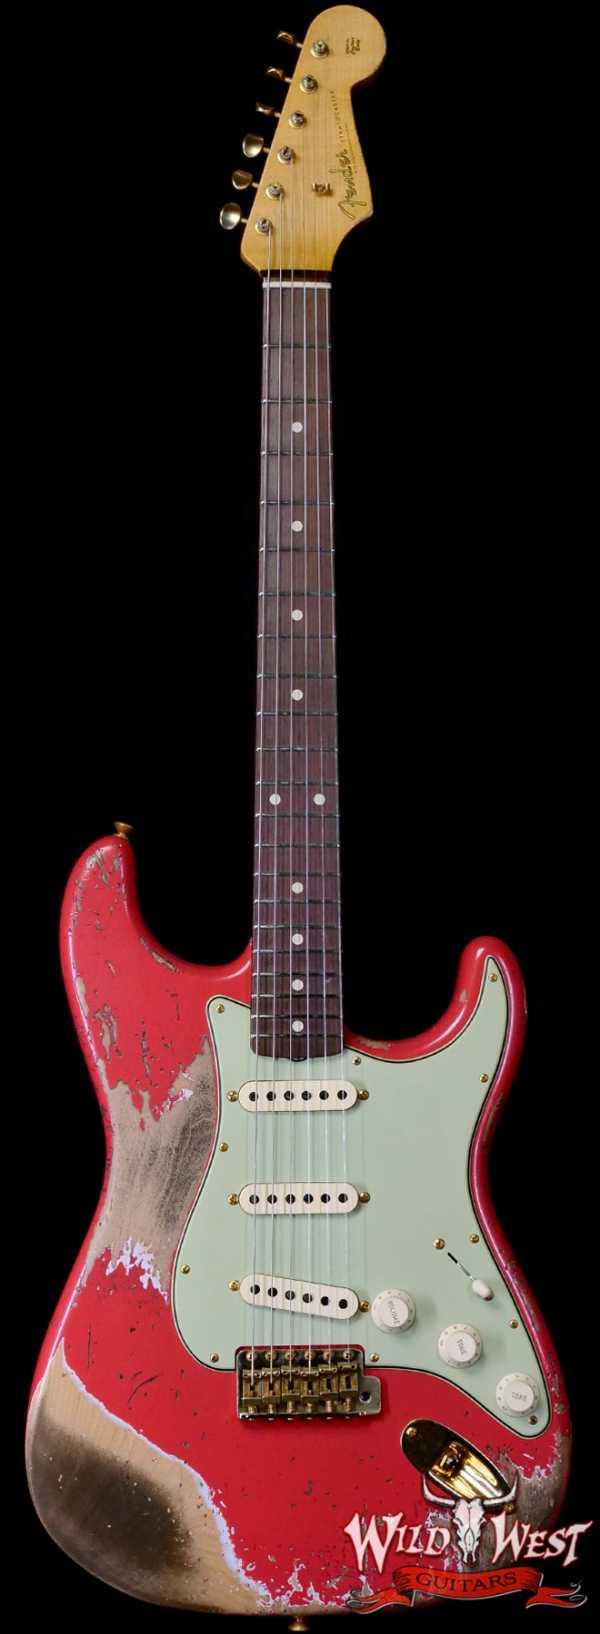 Fender Custom Shop Wild West Guitars 25th Anniversary 1960 Stratocaster Madagascar Rosewood Fretboard Heavy Relic Fiesta Red 7.60 LBS